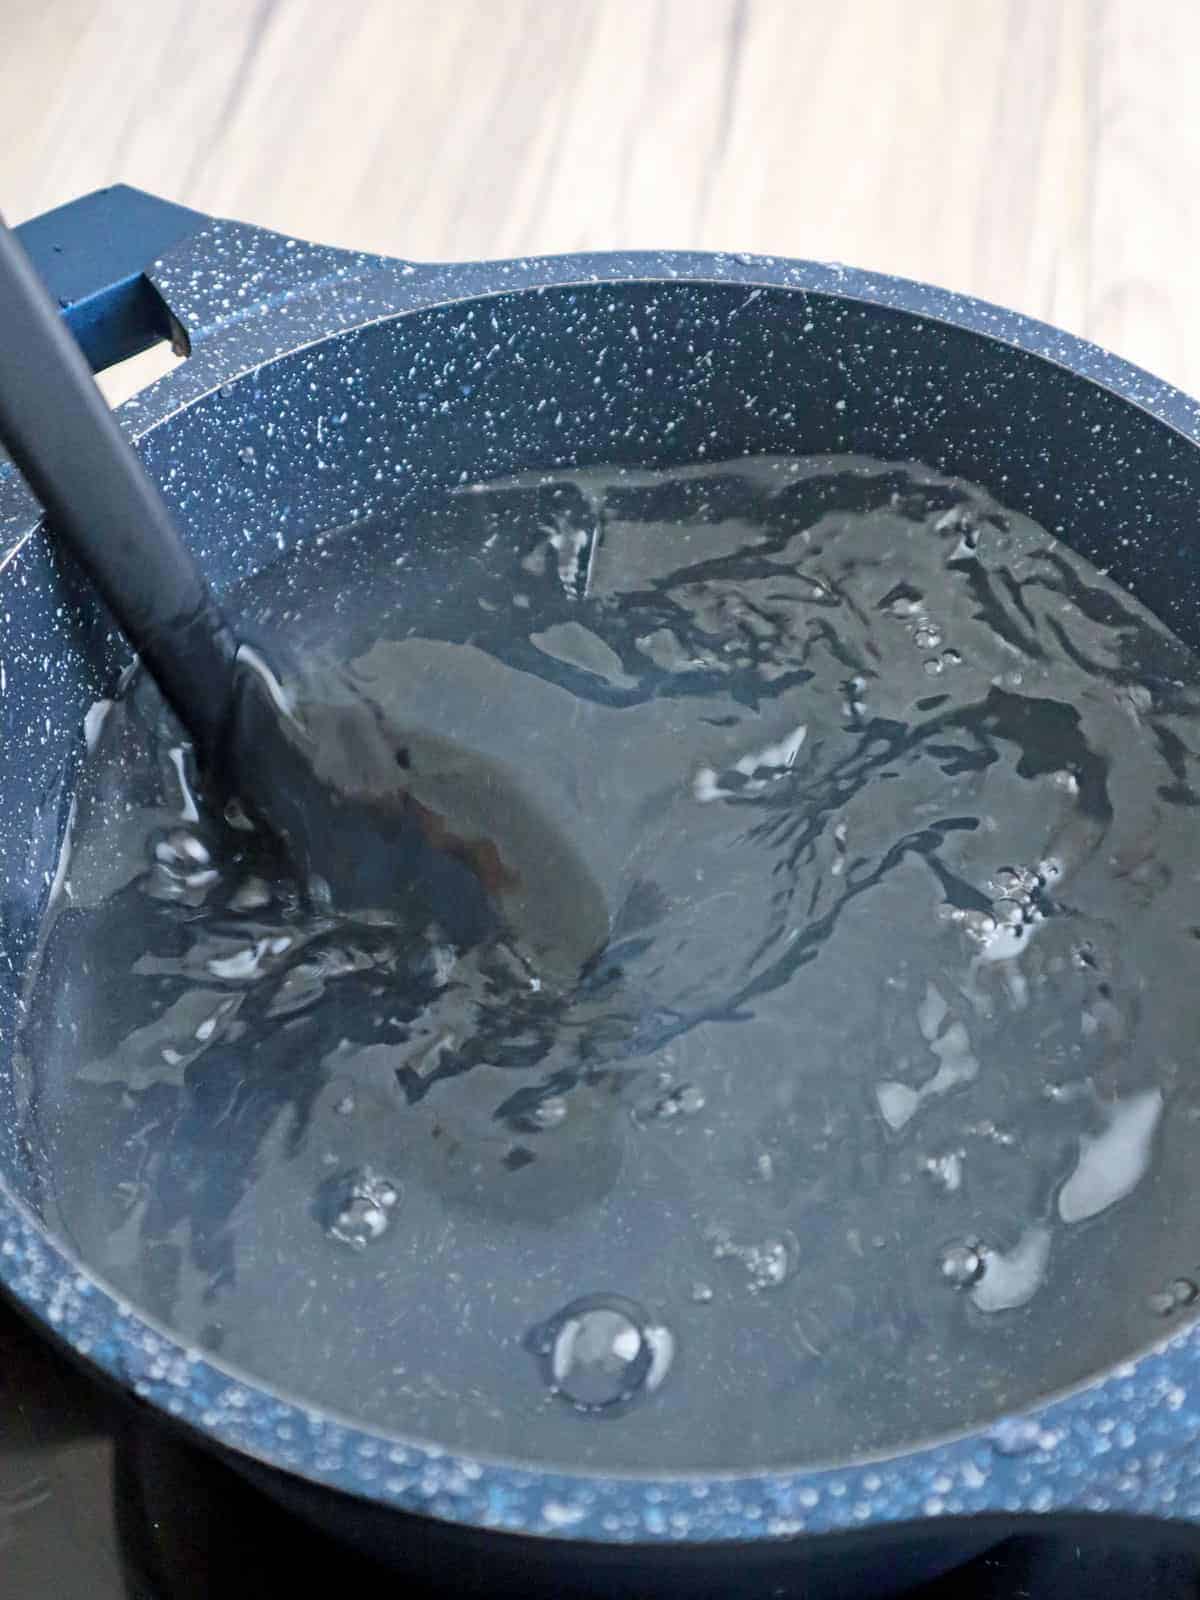 brining solution in a pot